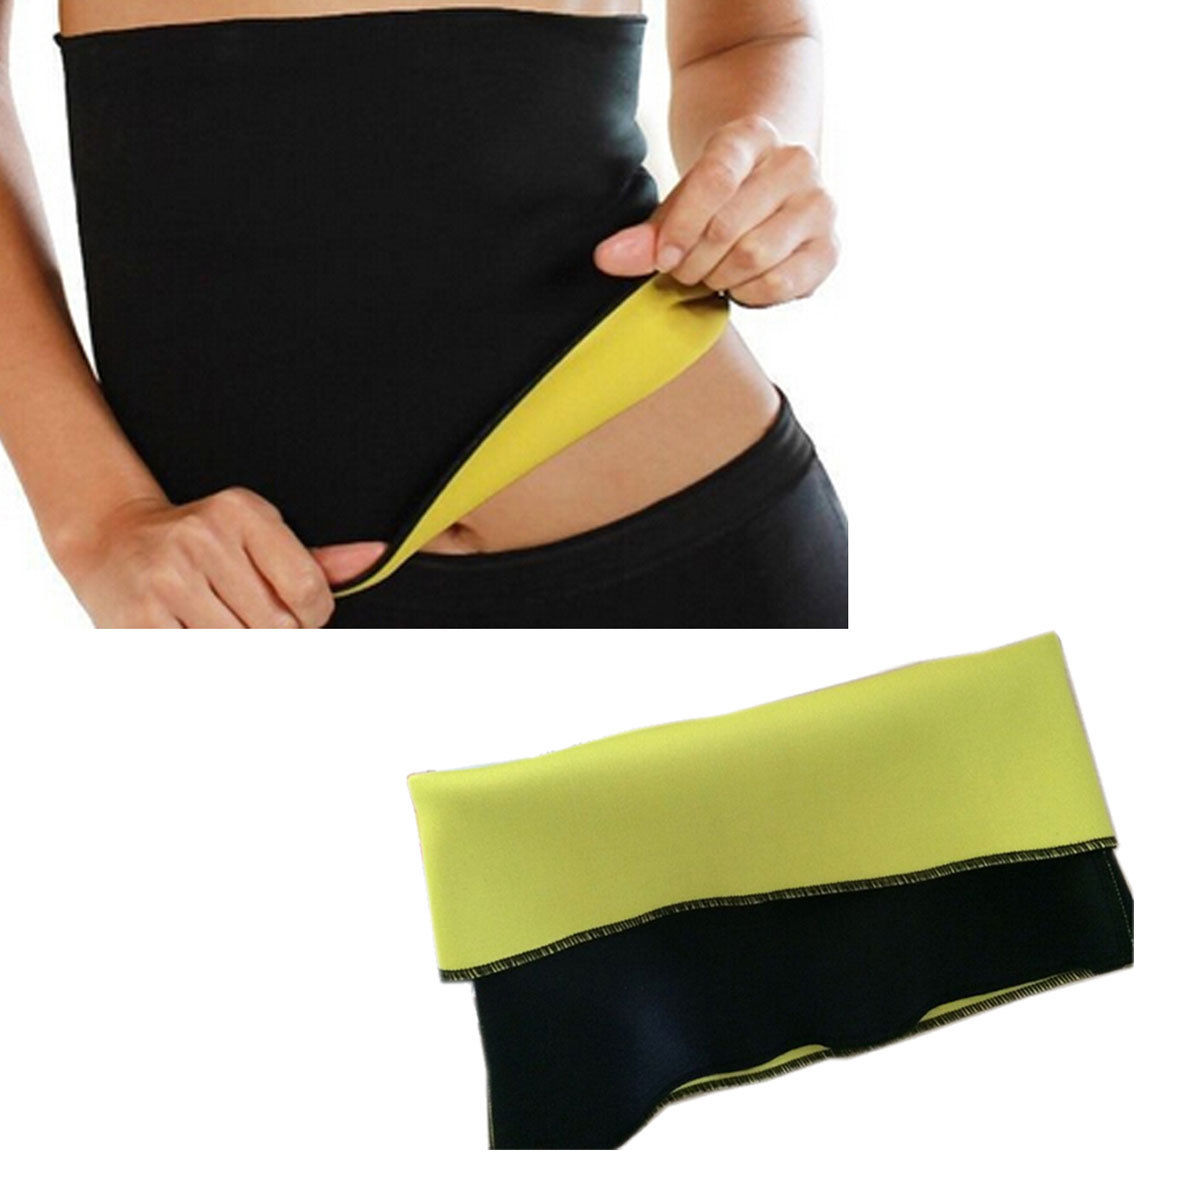 New Slimming Waist Belts Neoprene s Body Shaper Training Corsets Promote Sweat Hot Sale